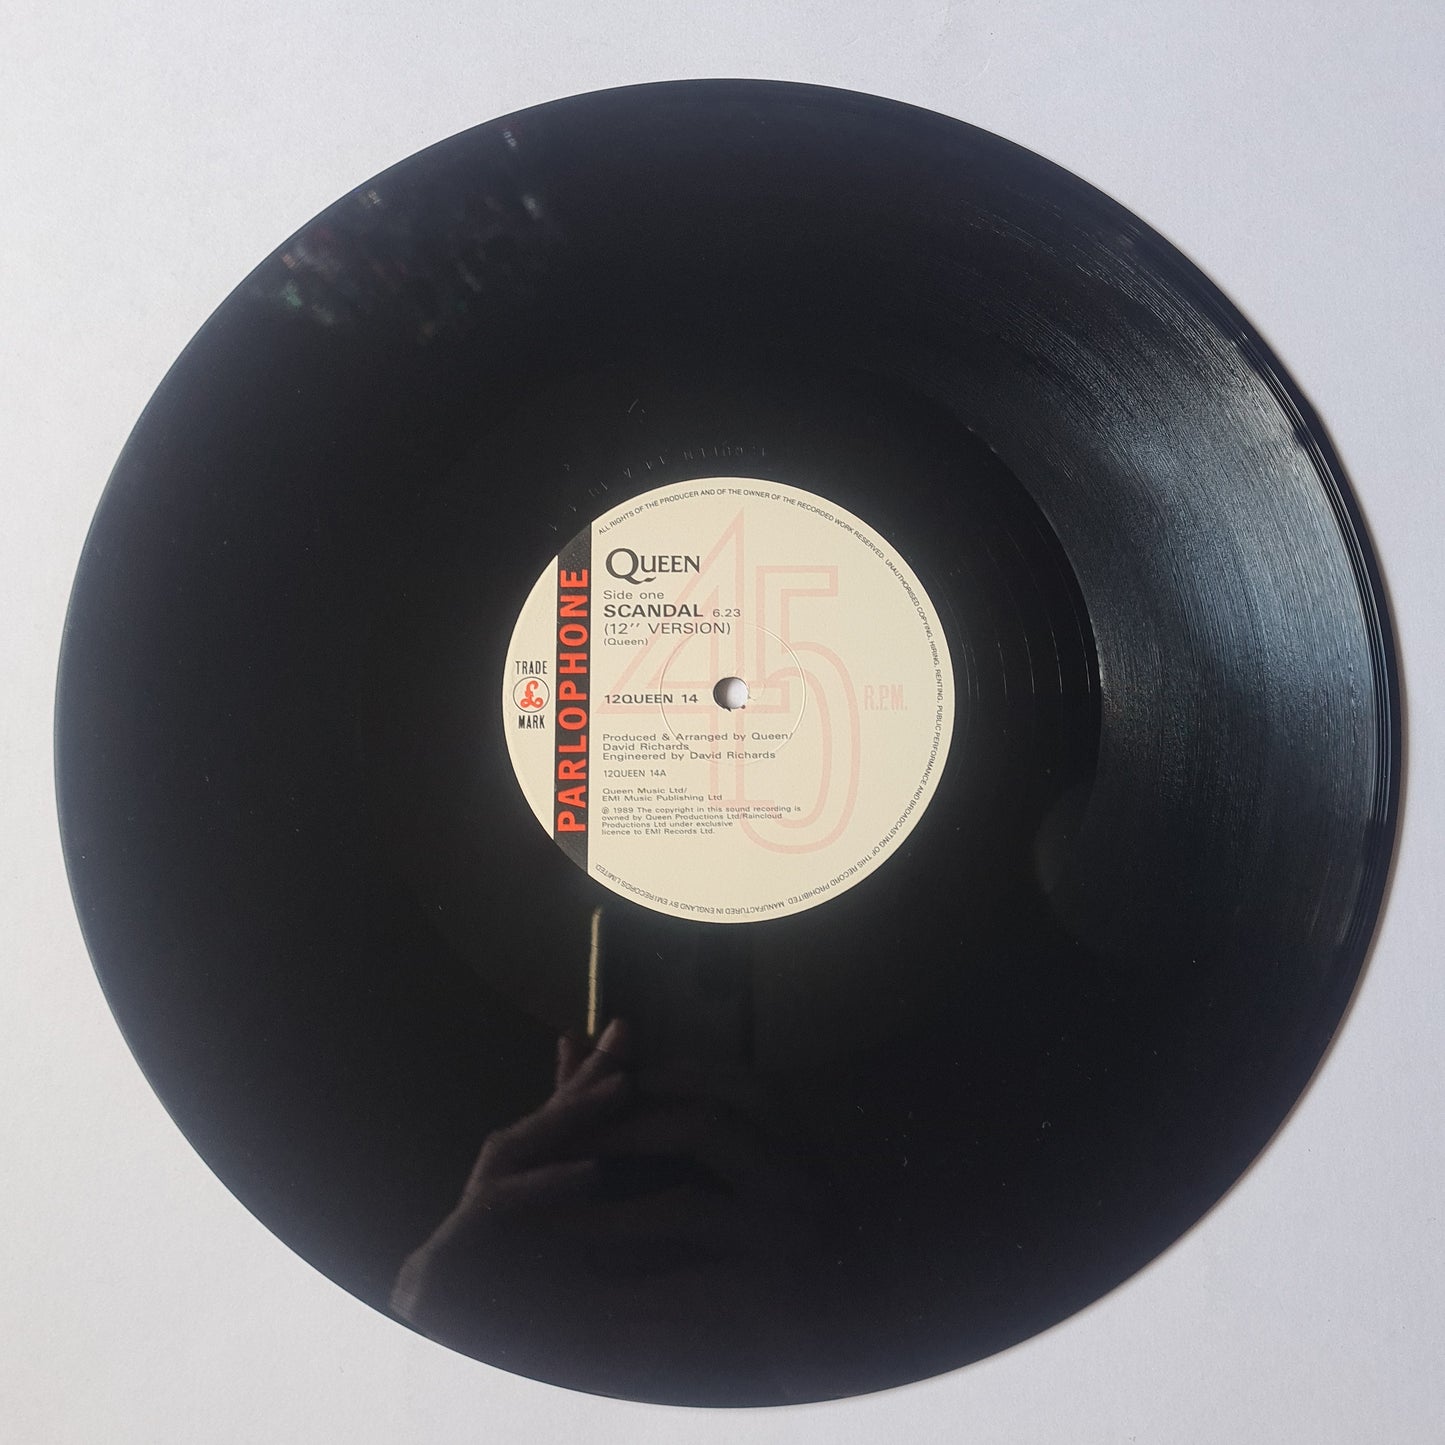 Queen – Scandal (12inch Maxi Single) - 1989